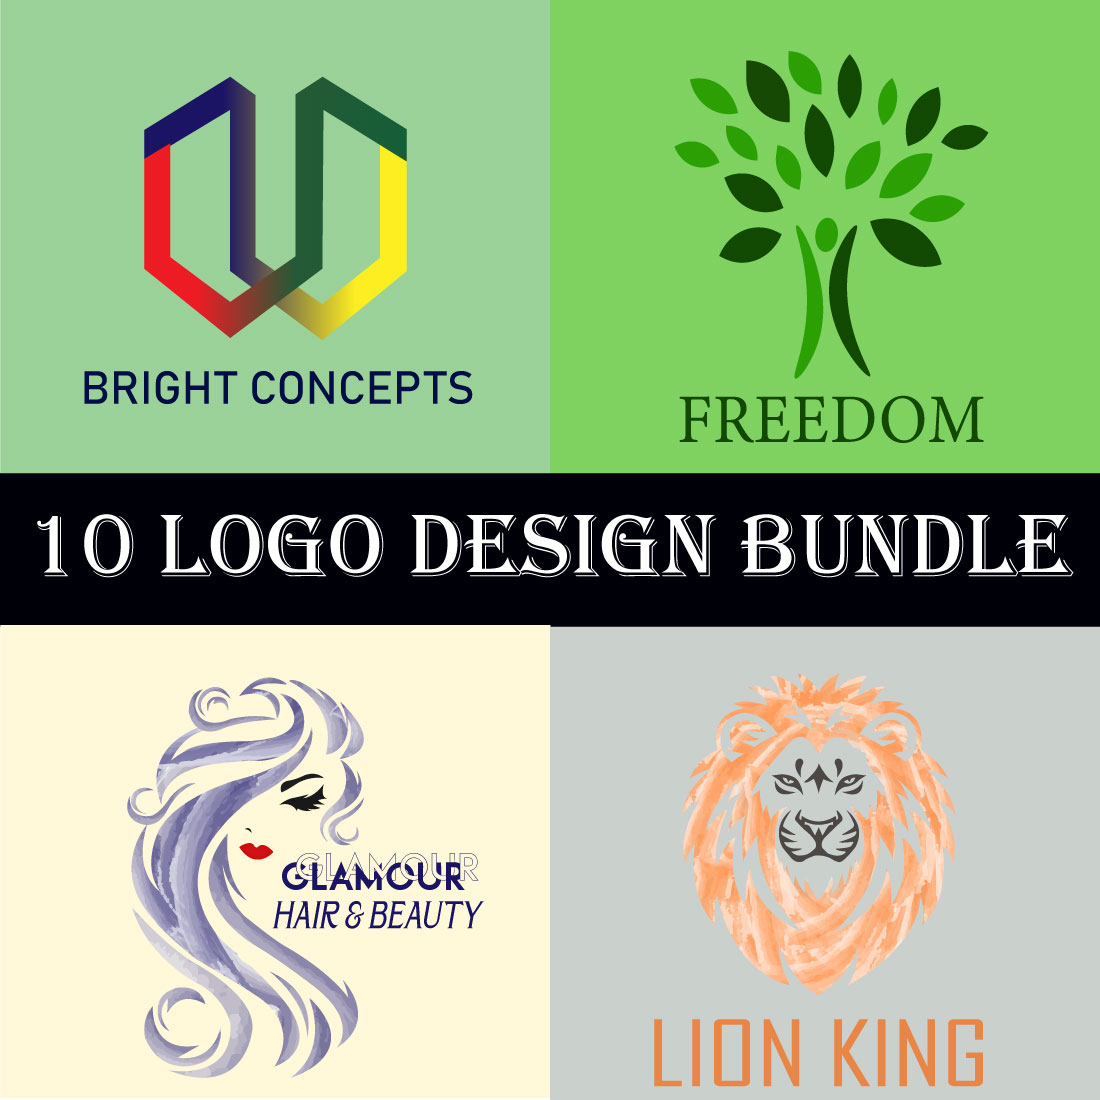 10 minimalist logo design bundle preview image.